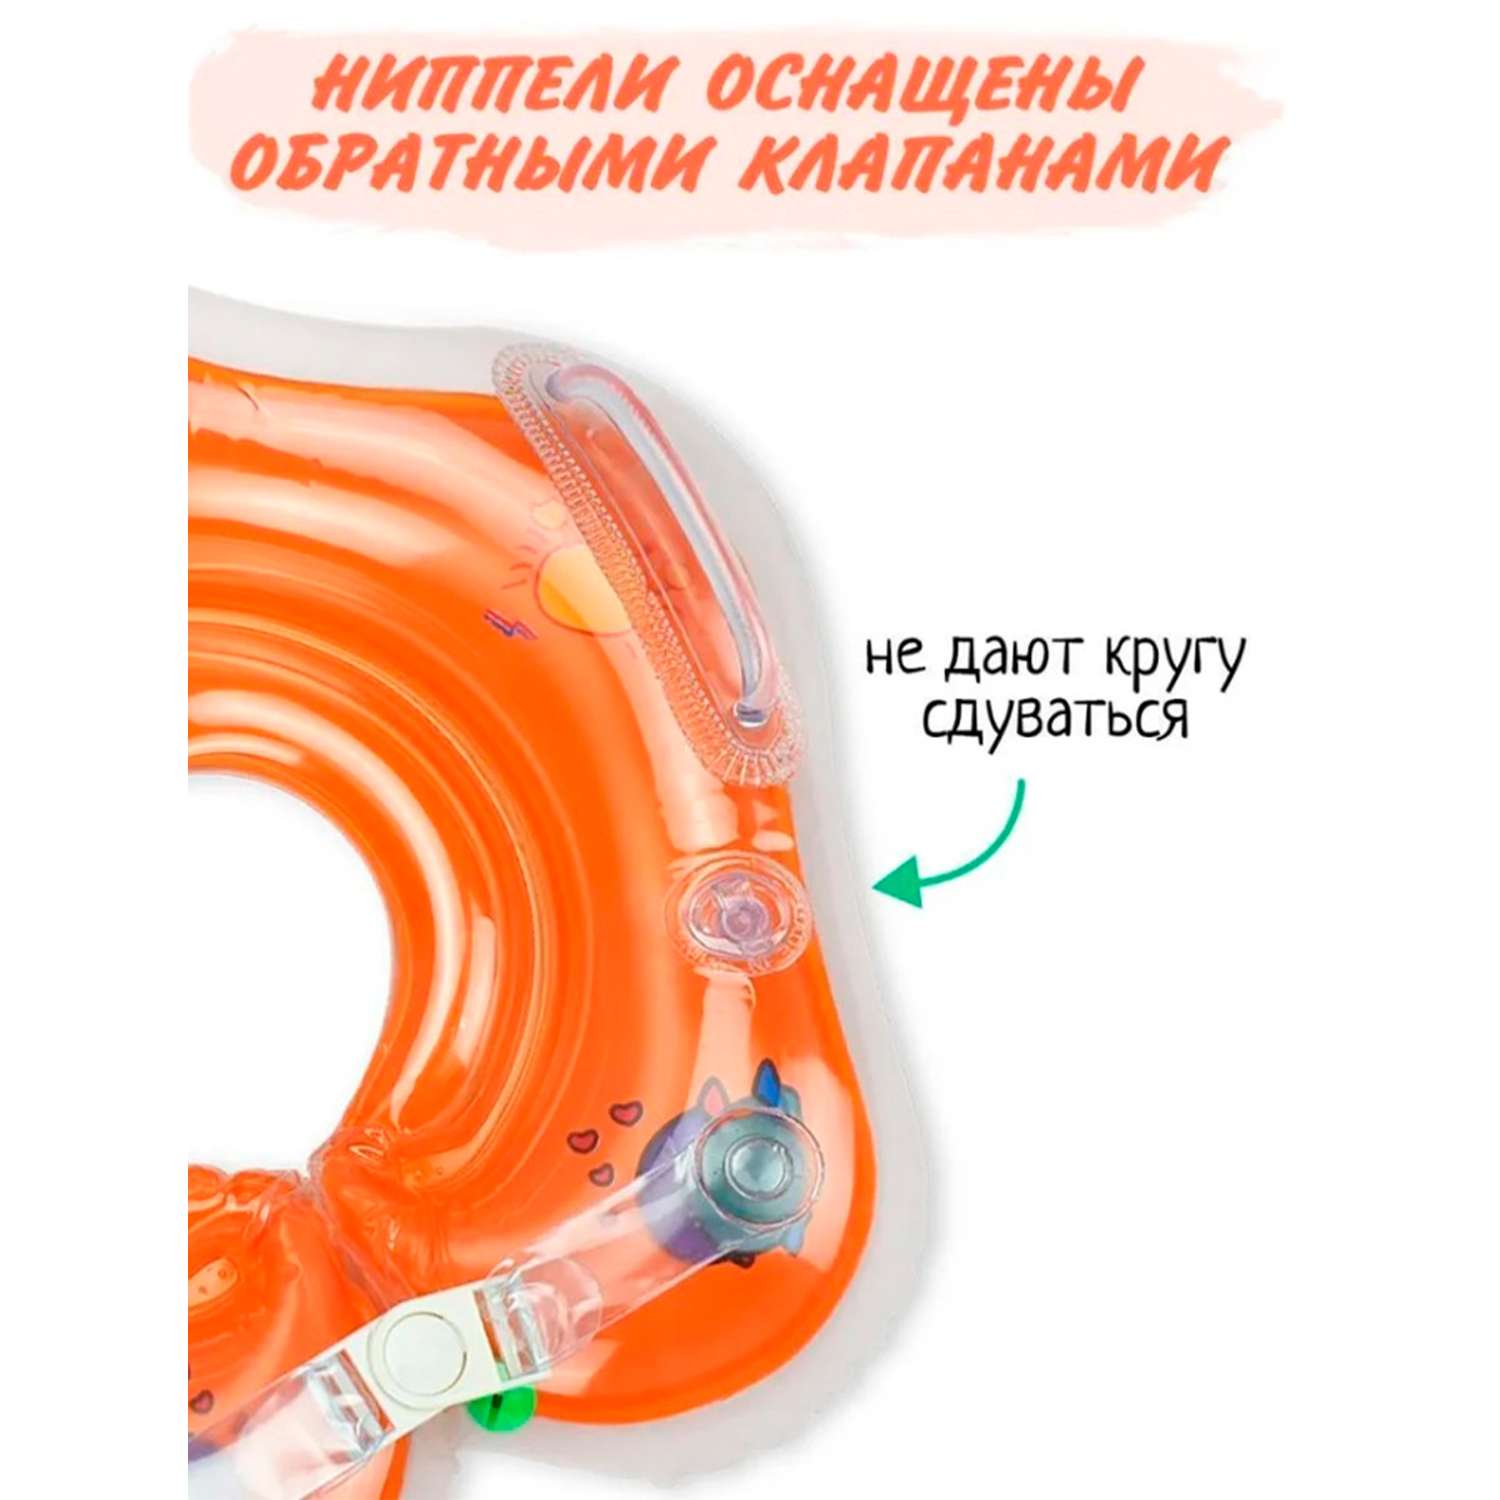 Надувной круг SHARKTOYS Для младенцев оранжевый - фото 3